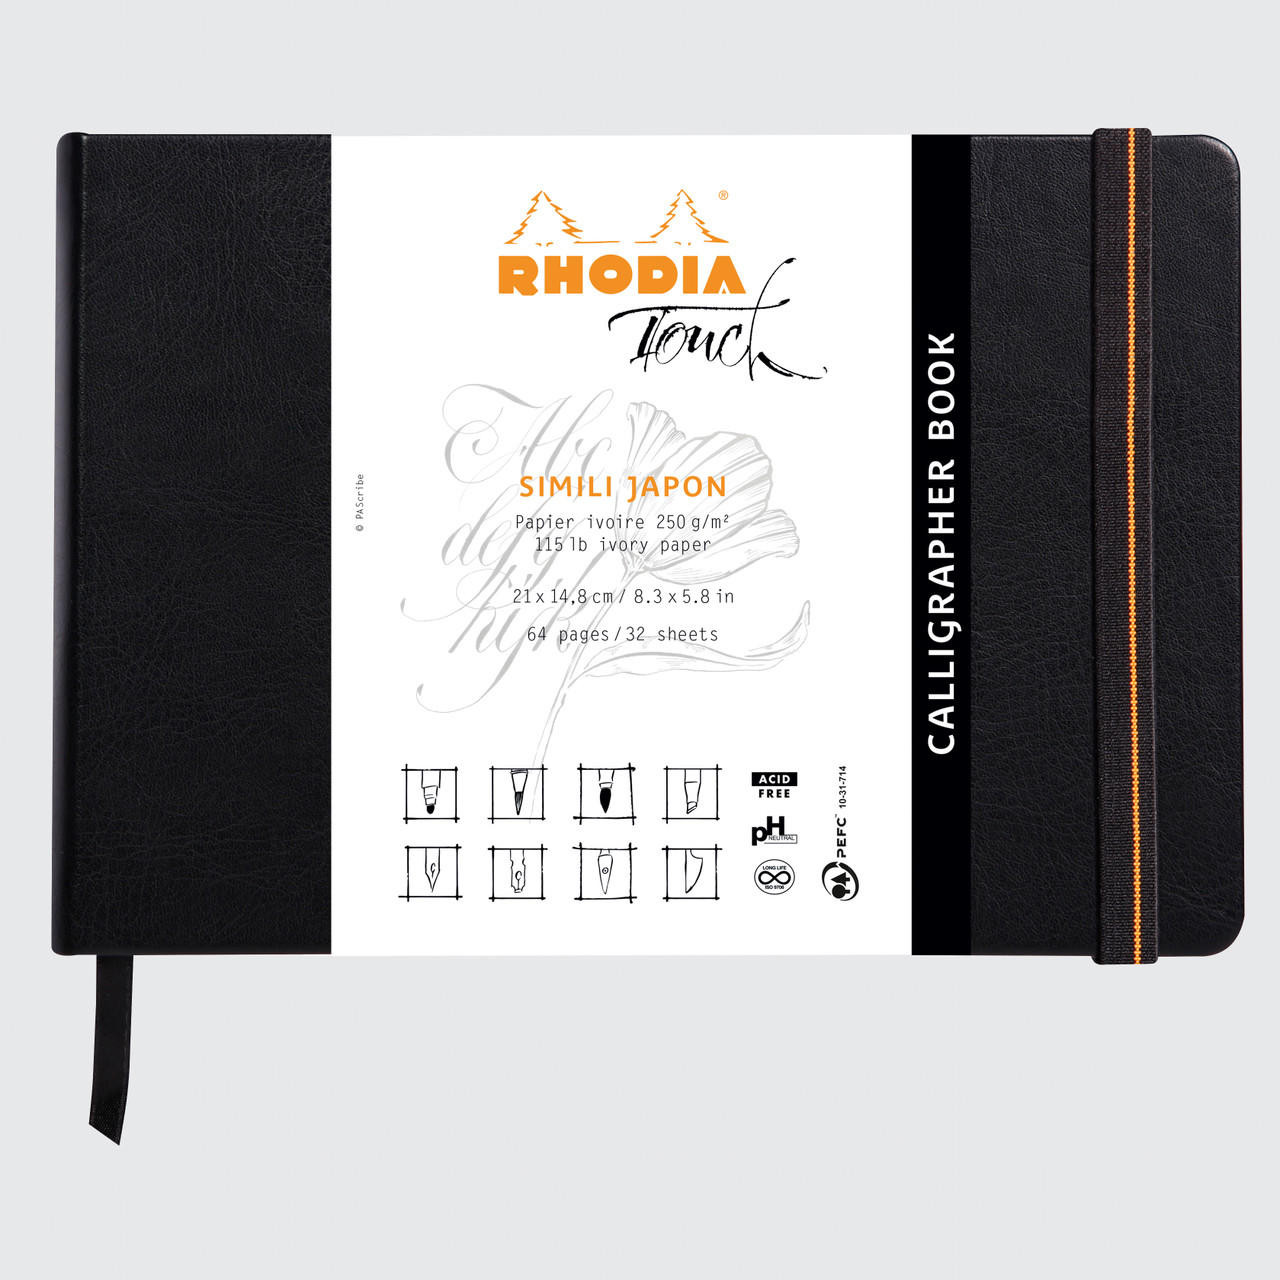 Rhodia Calligrapher Book Hardbound 250gsm 32 Sheets A5